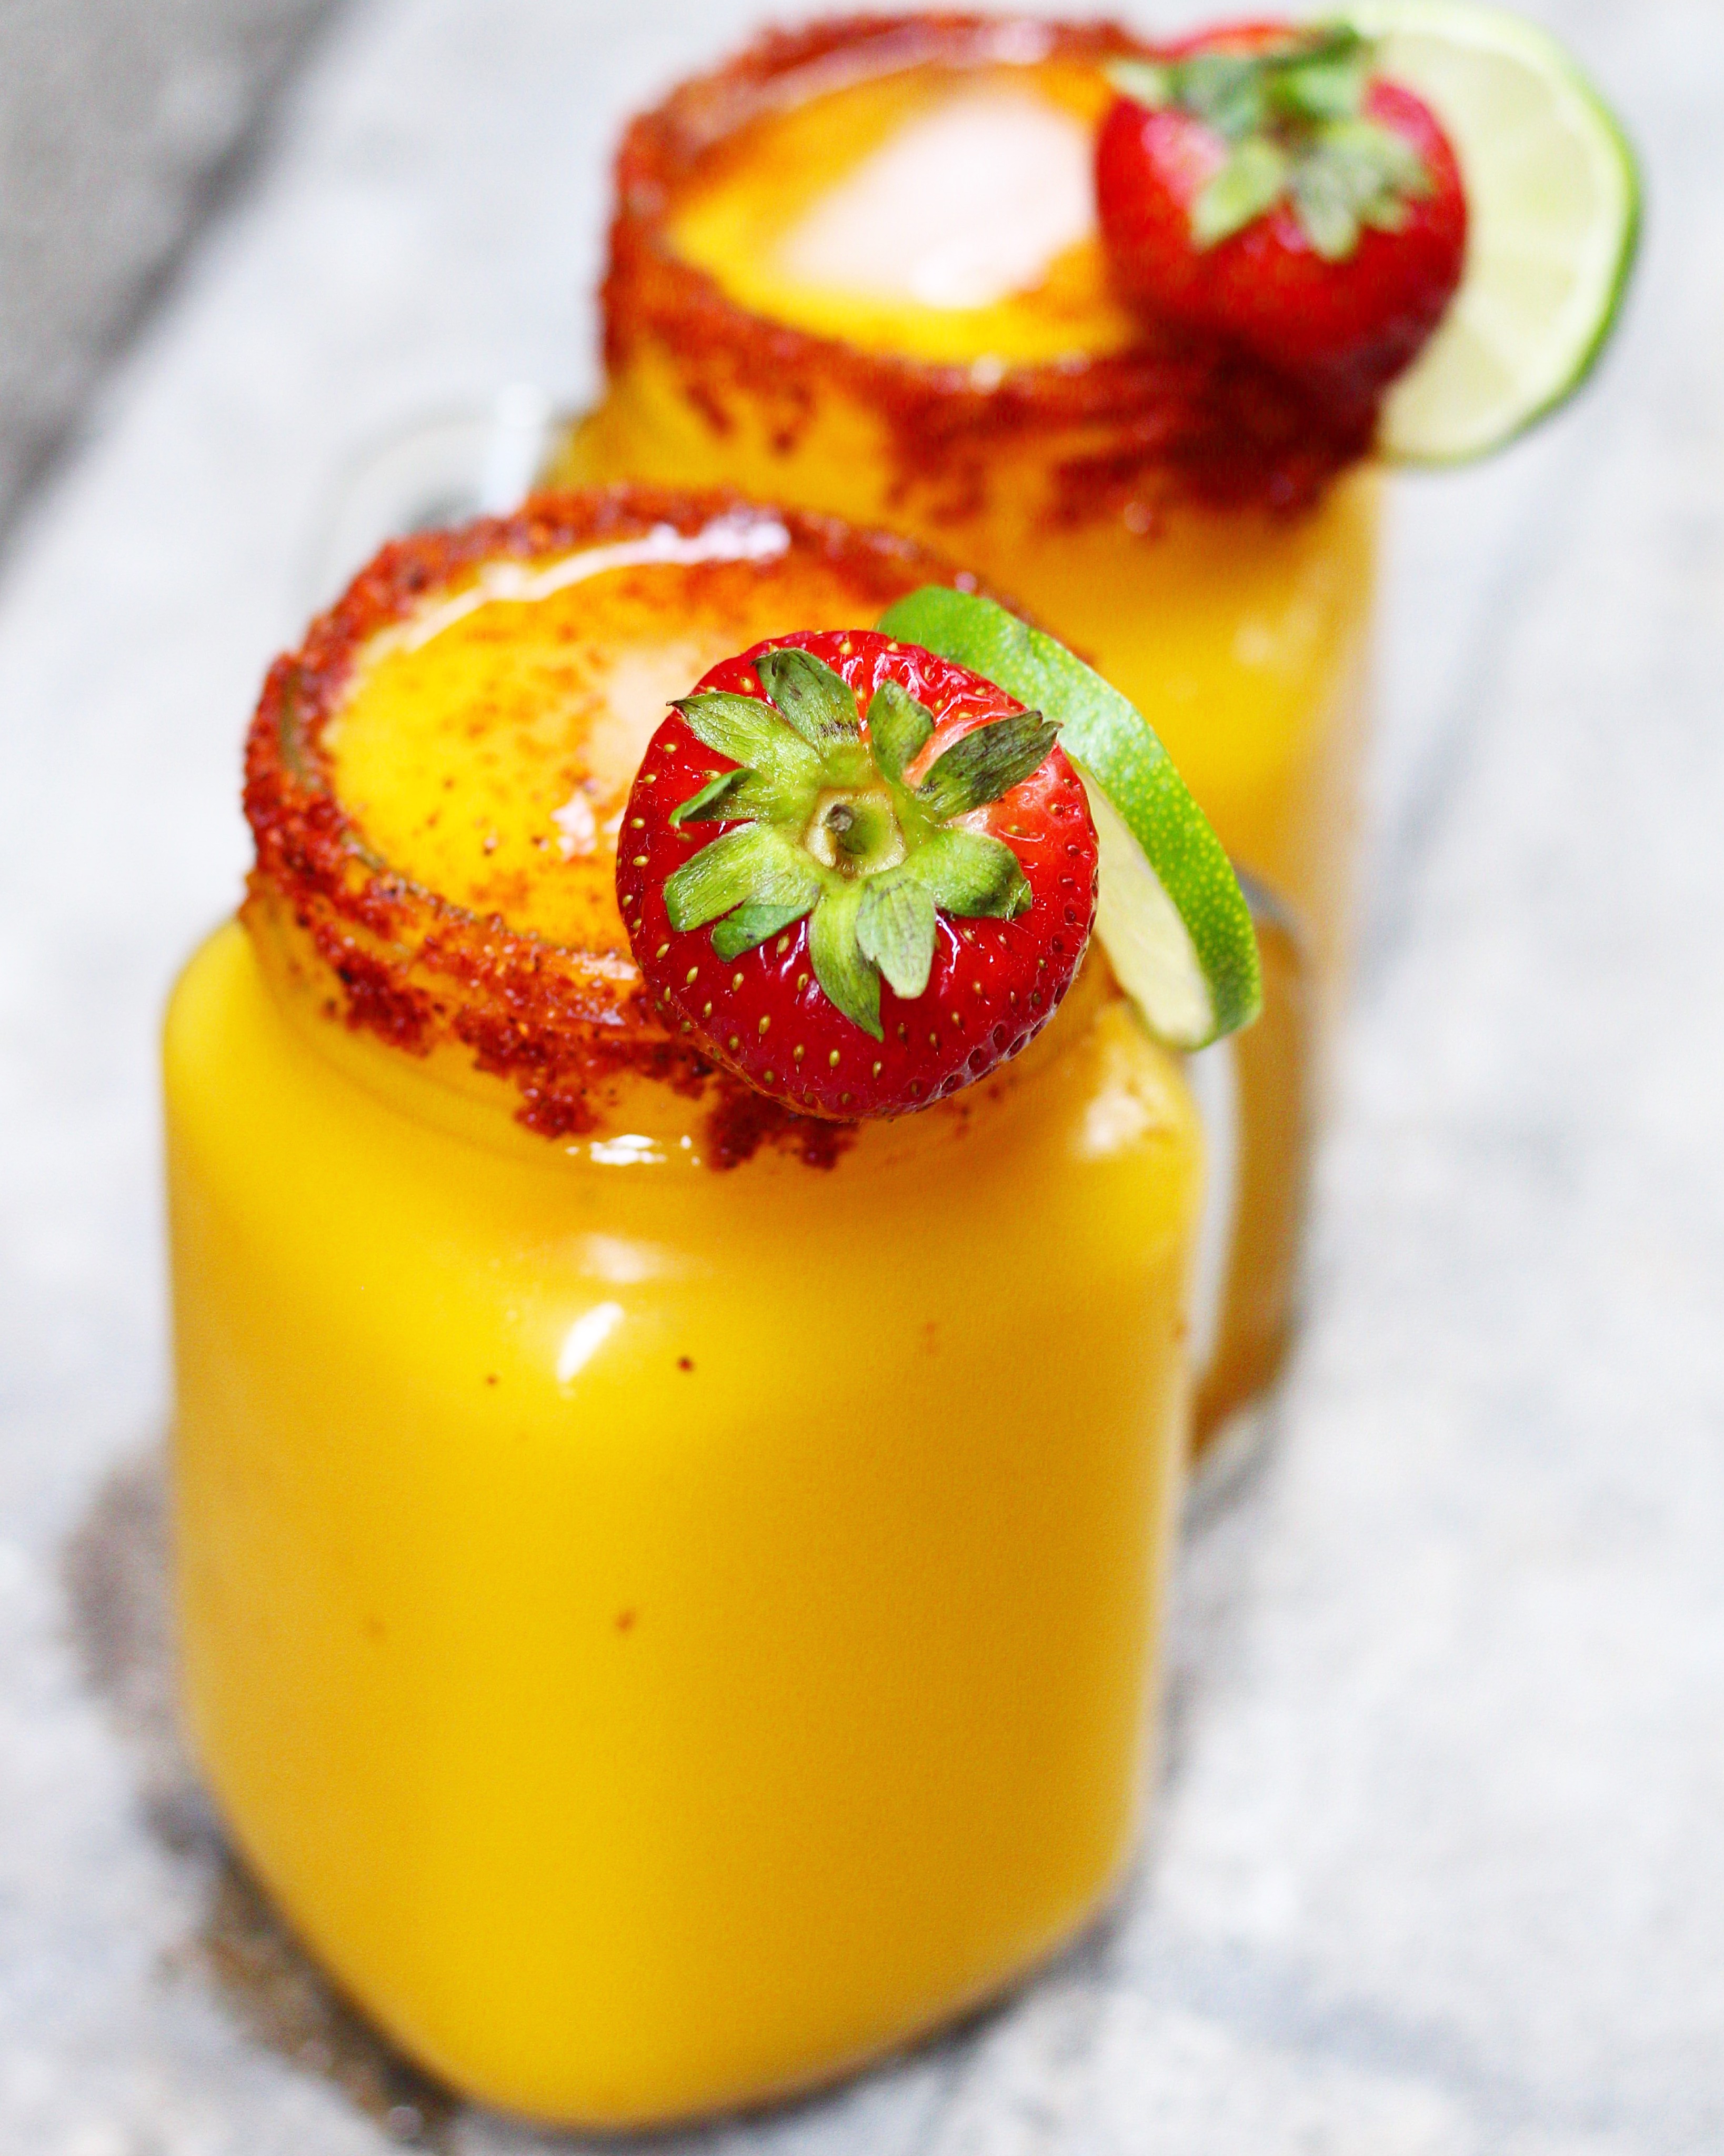 Frozen Mango Lemonade a simple beautiful and refreshing drink bursting with summer seasonal flavors.